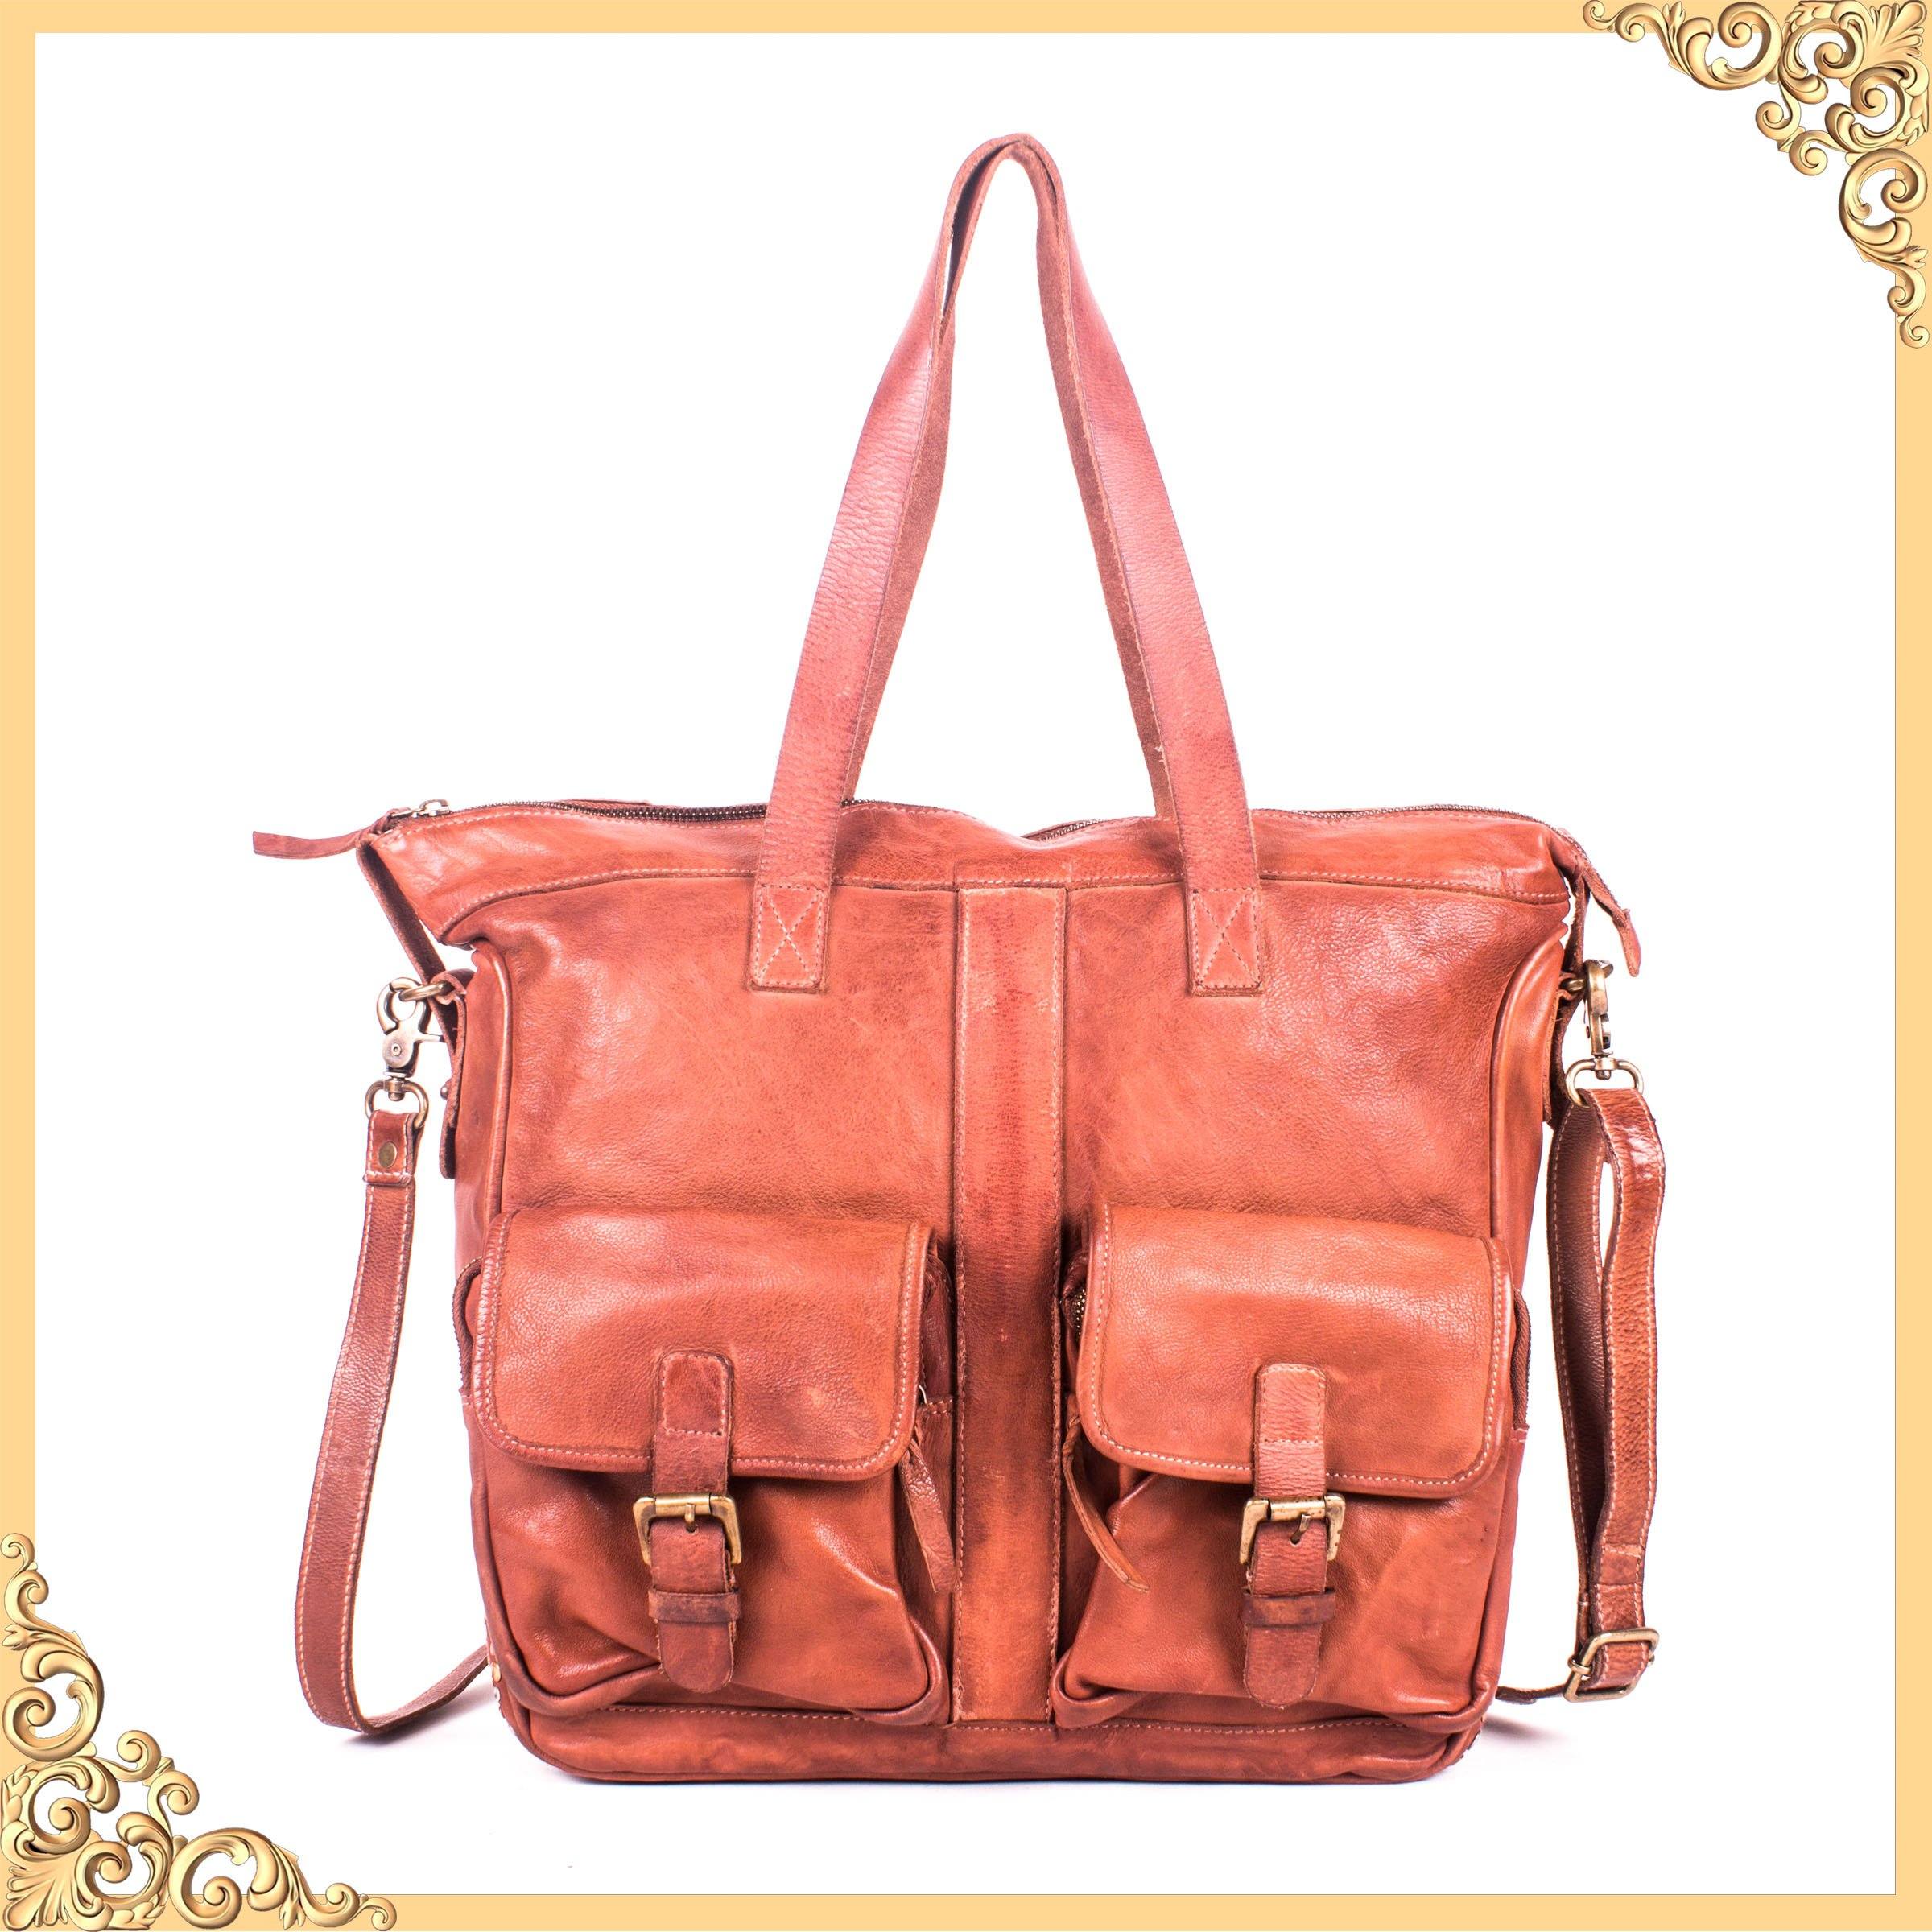 Art N Vintage - Women’s milano leather Tote Shopper Handbag